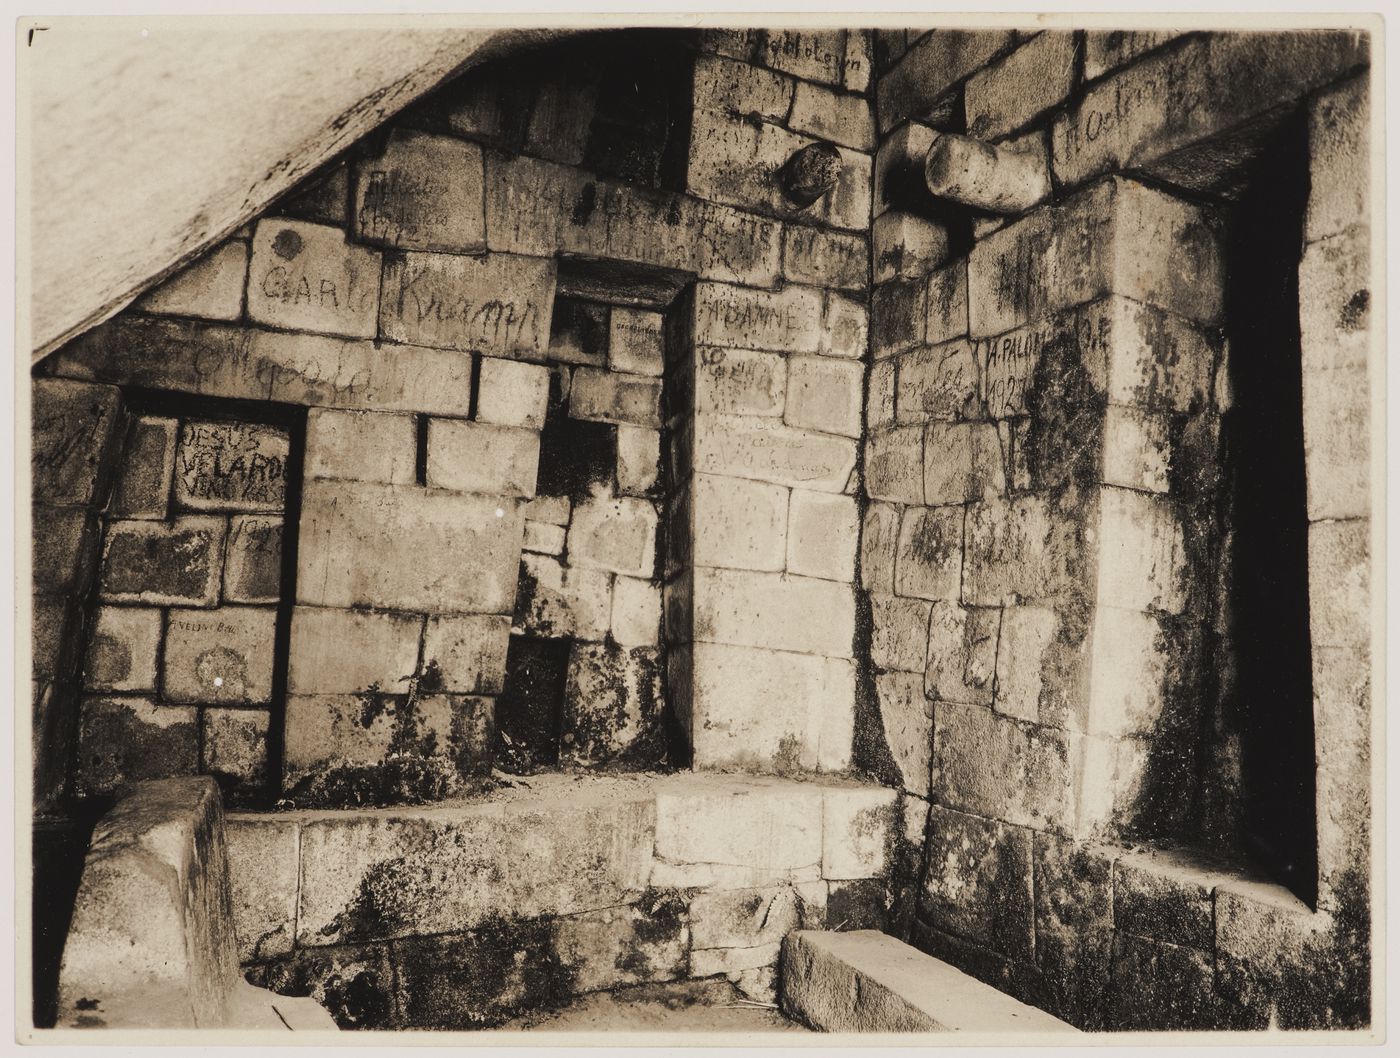 Interior view of the Royal Mausoleum showing trapezoidal niches below the Torreón, Machu Picchu, Peru